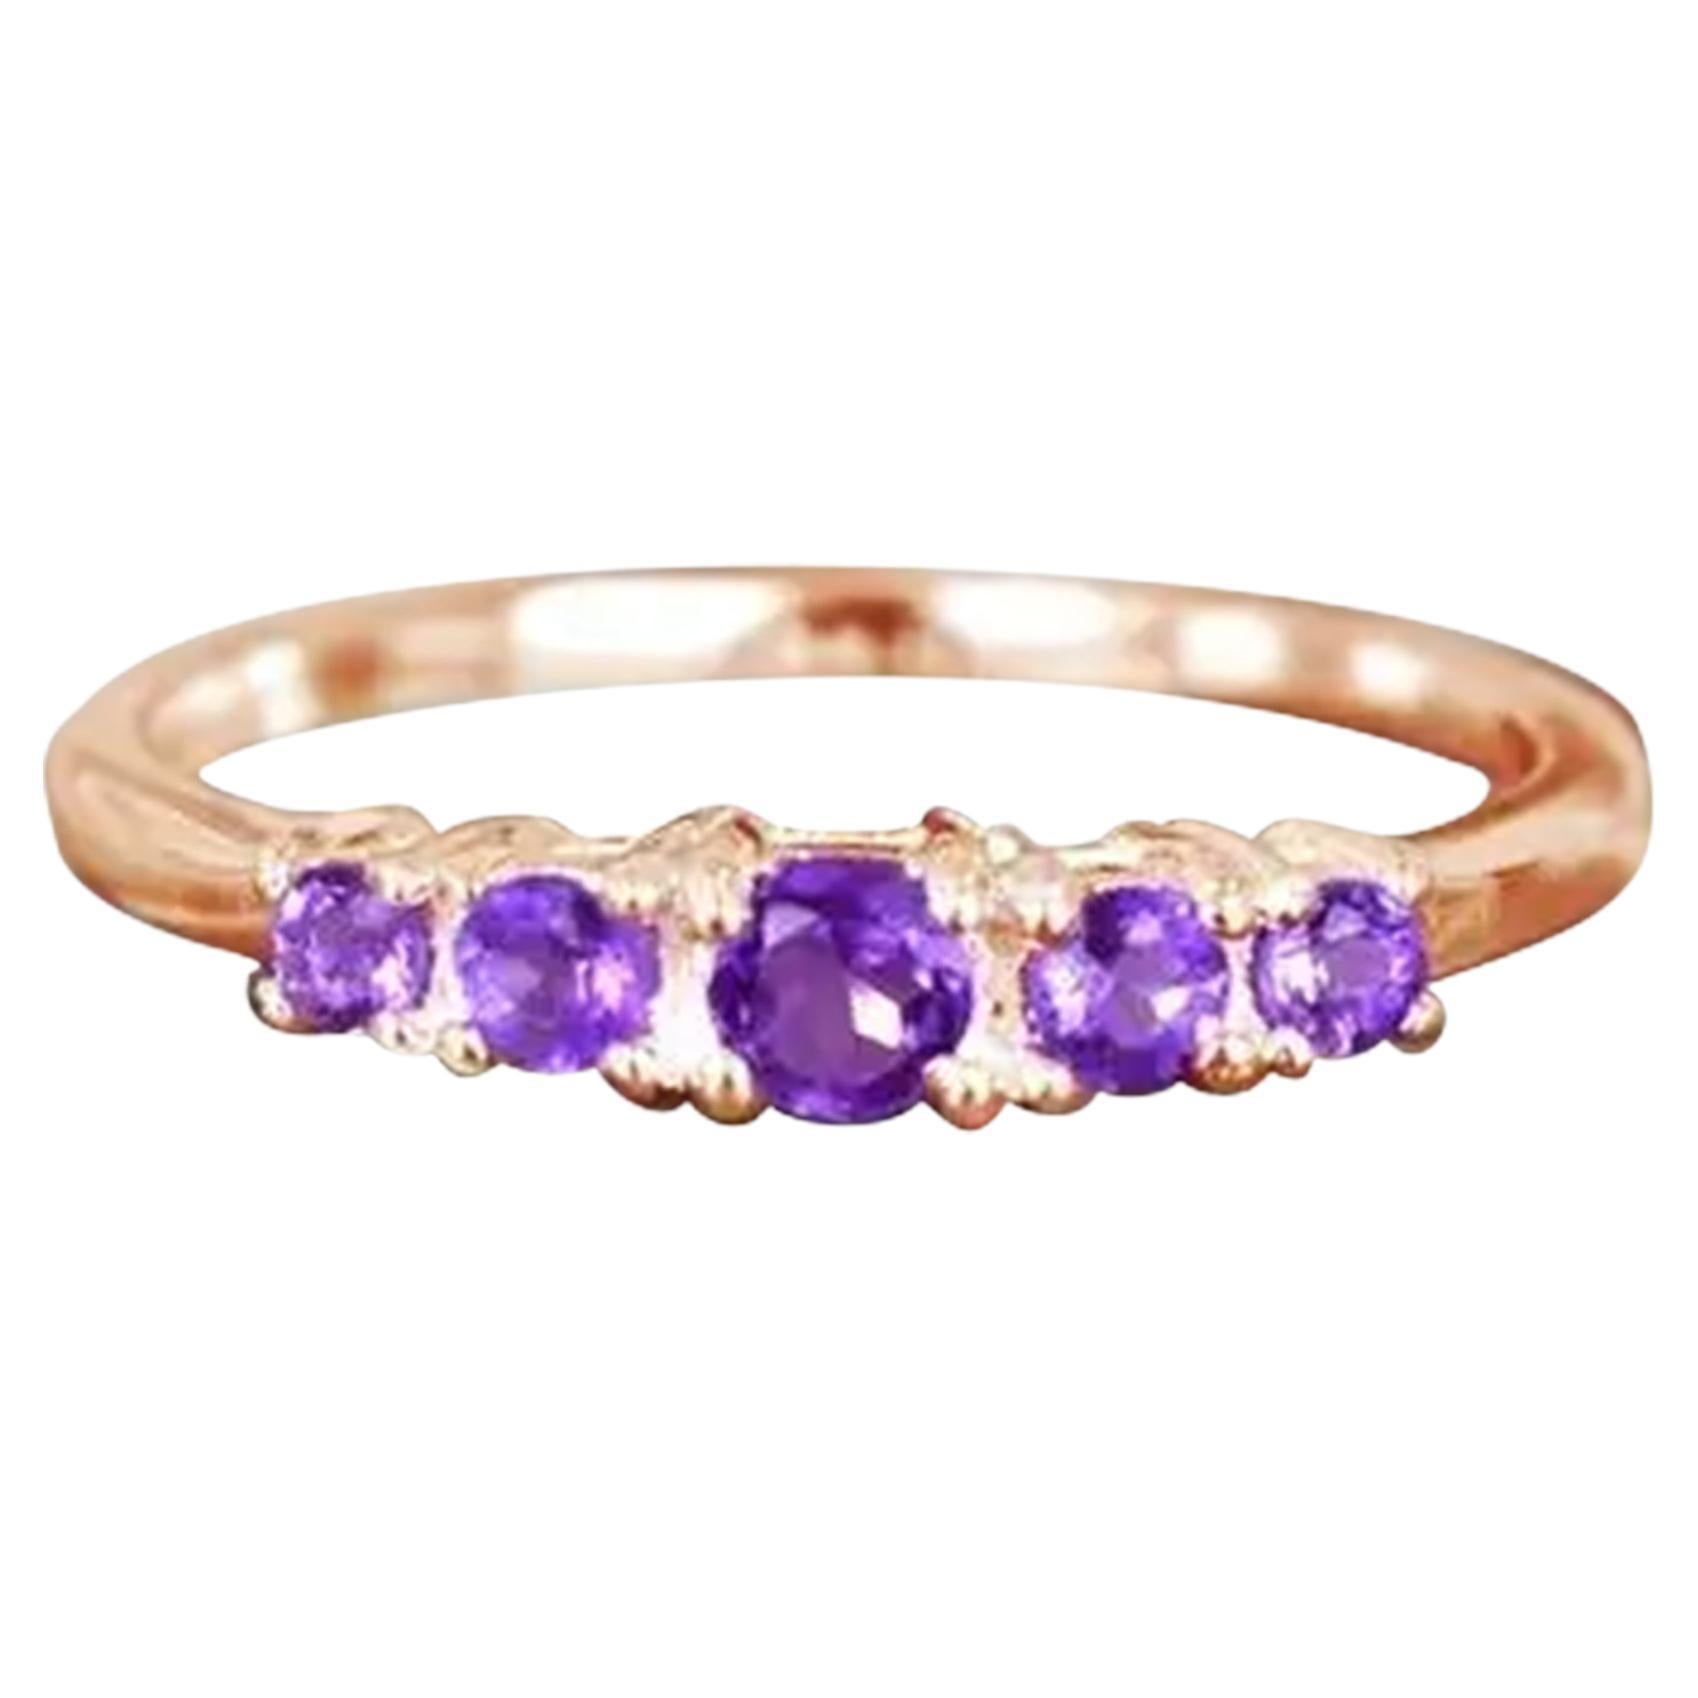 For Sale:  14k Gold Multiple Gemstone Ring Birthstone Ring